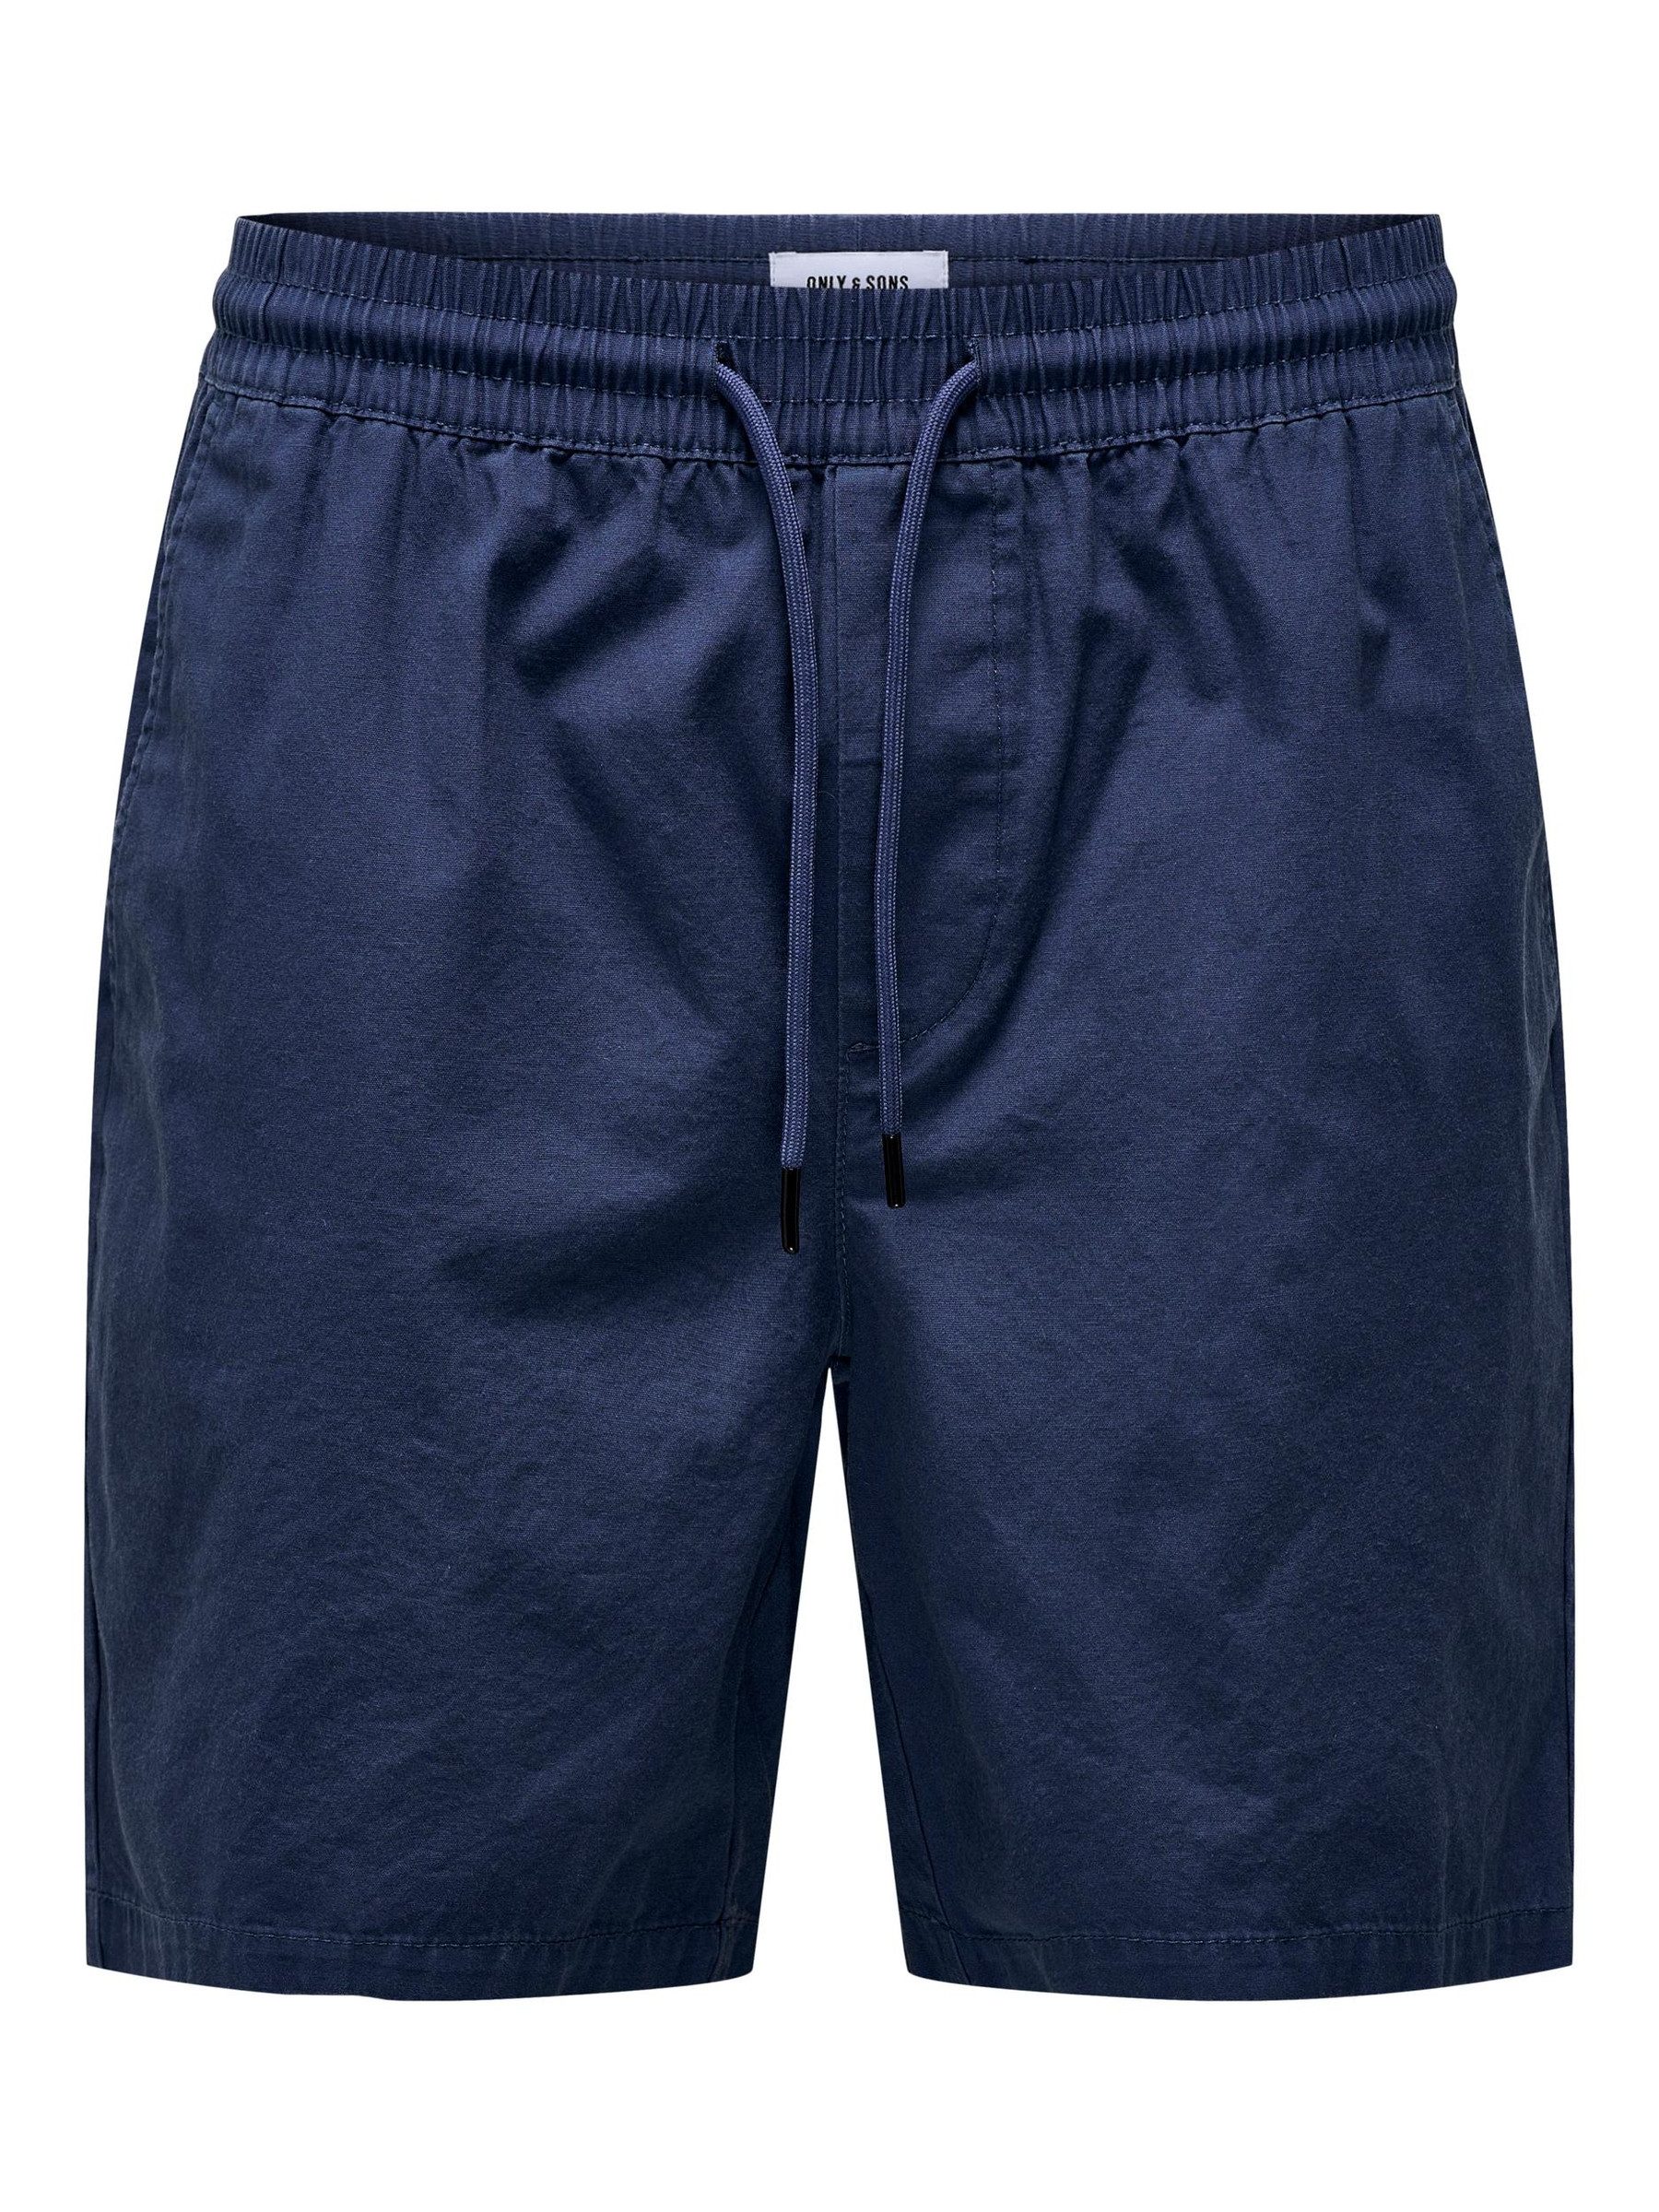 ONLY & SONS Sweatshorts Shorts Bermuda Pants Sommer Hose 7318 in Dunkelblau